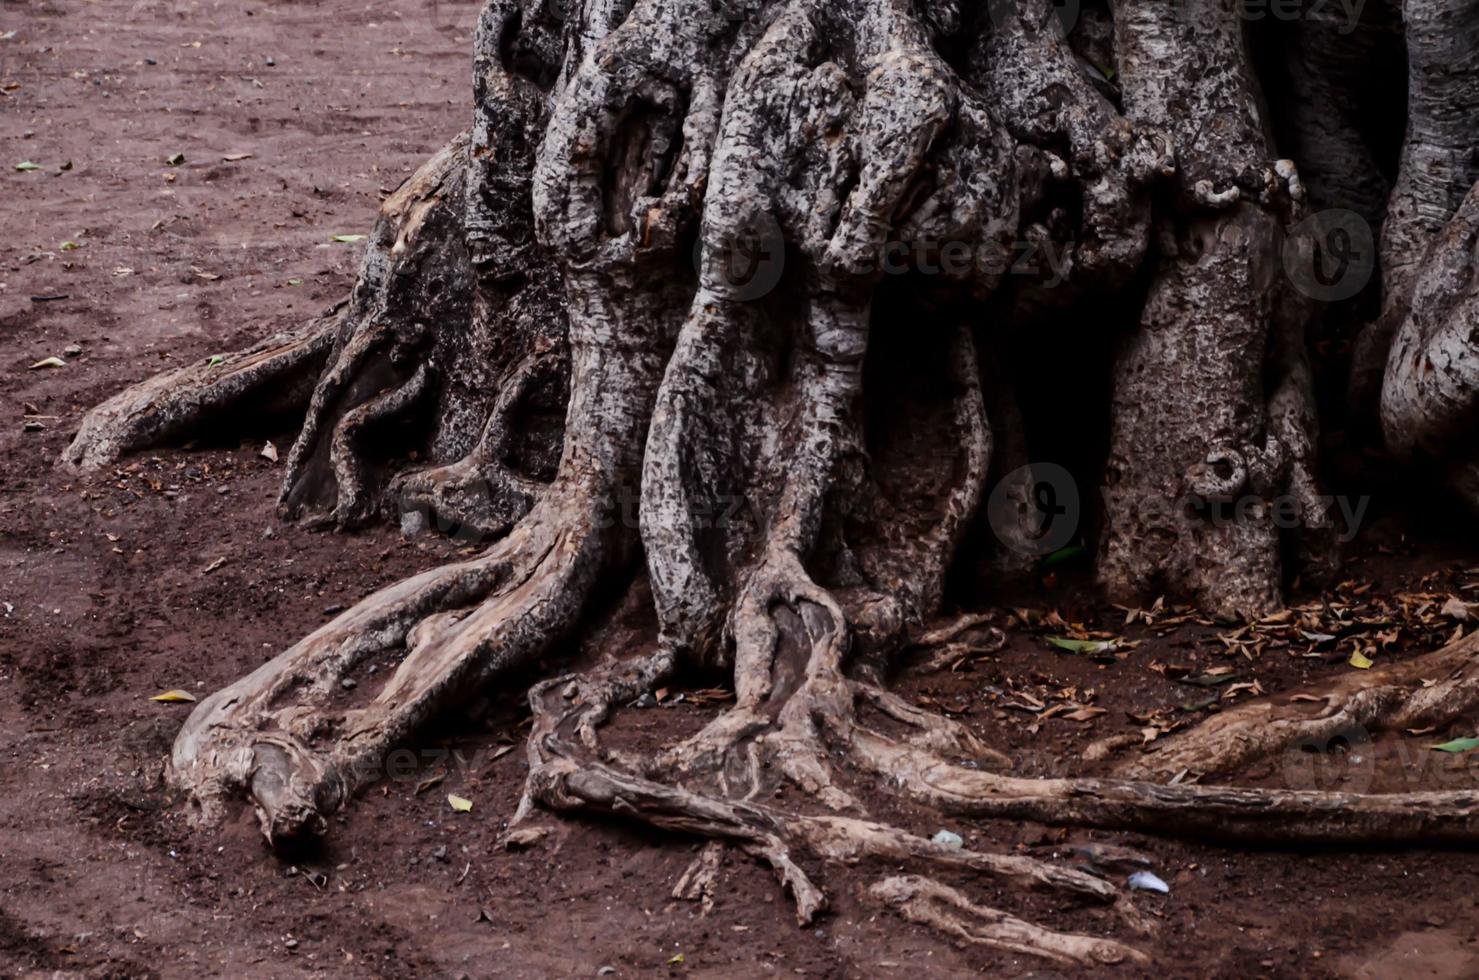 racines d'un arbre photo